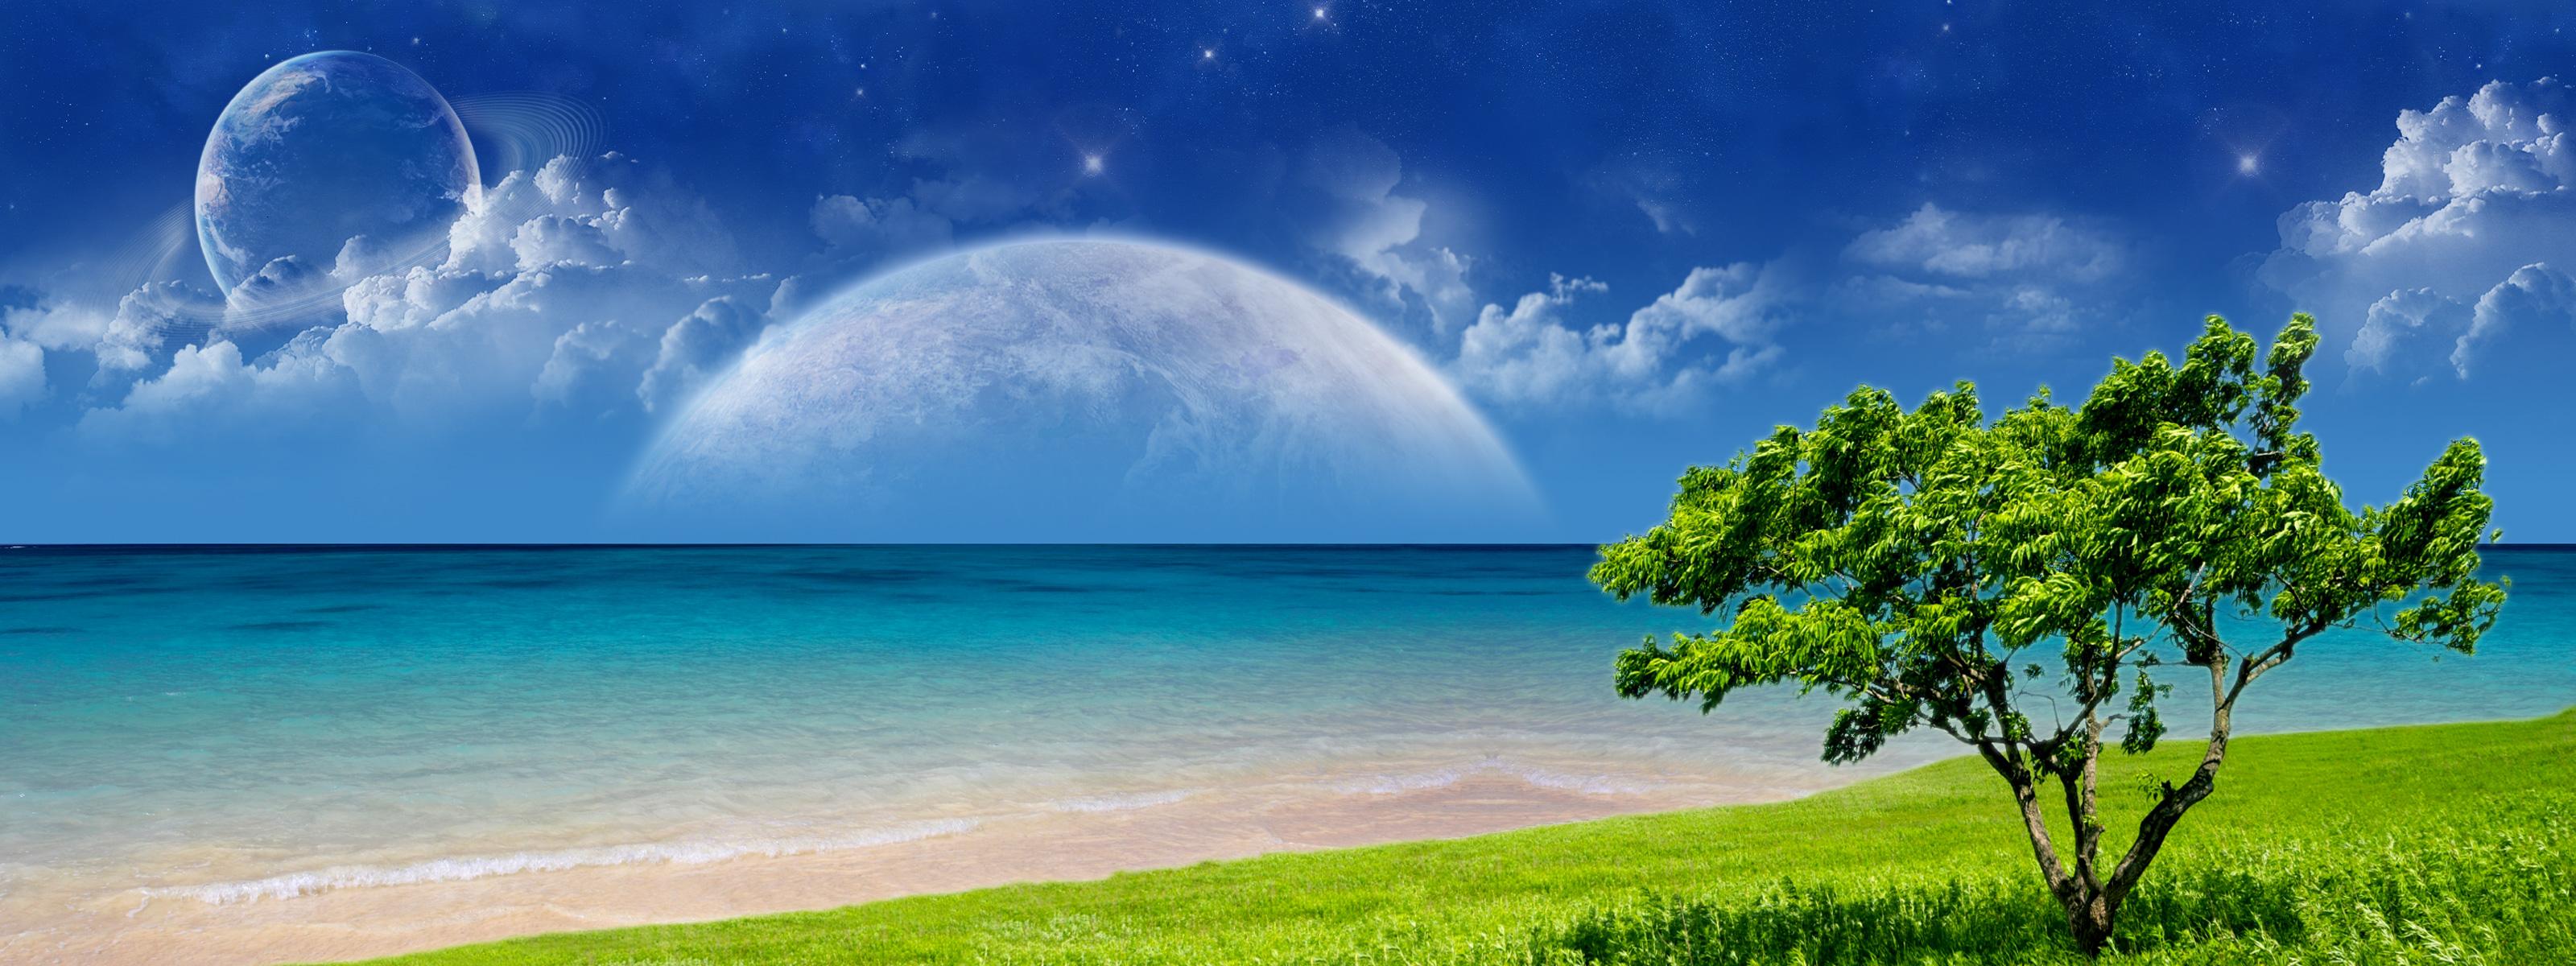  manip ocean sea sky planets sci fi mood clouds wallpaper background